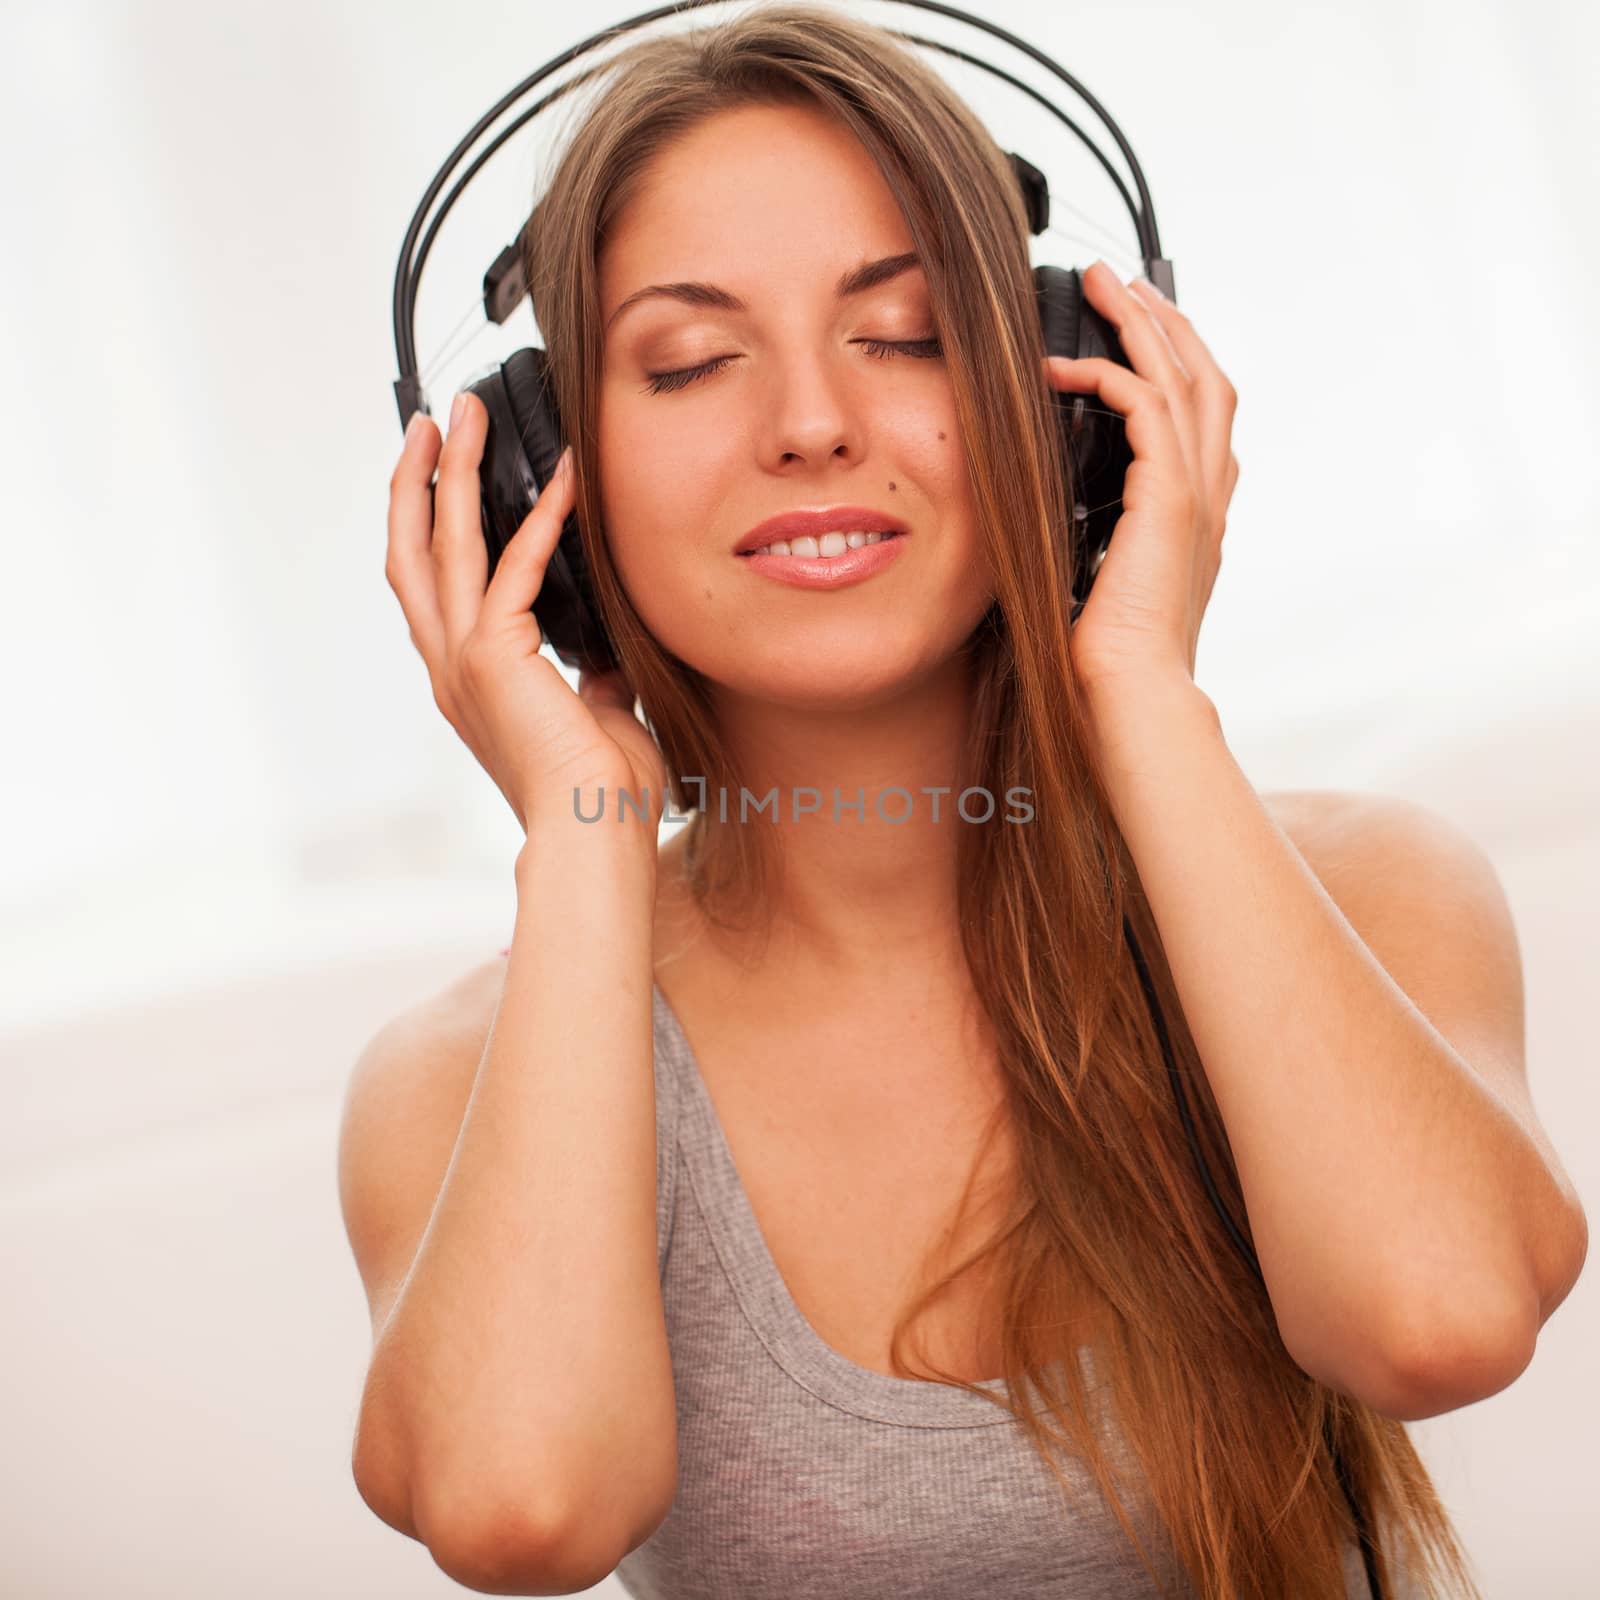 Beautiful woman enjoy music in headphones sitting on a floor